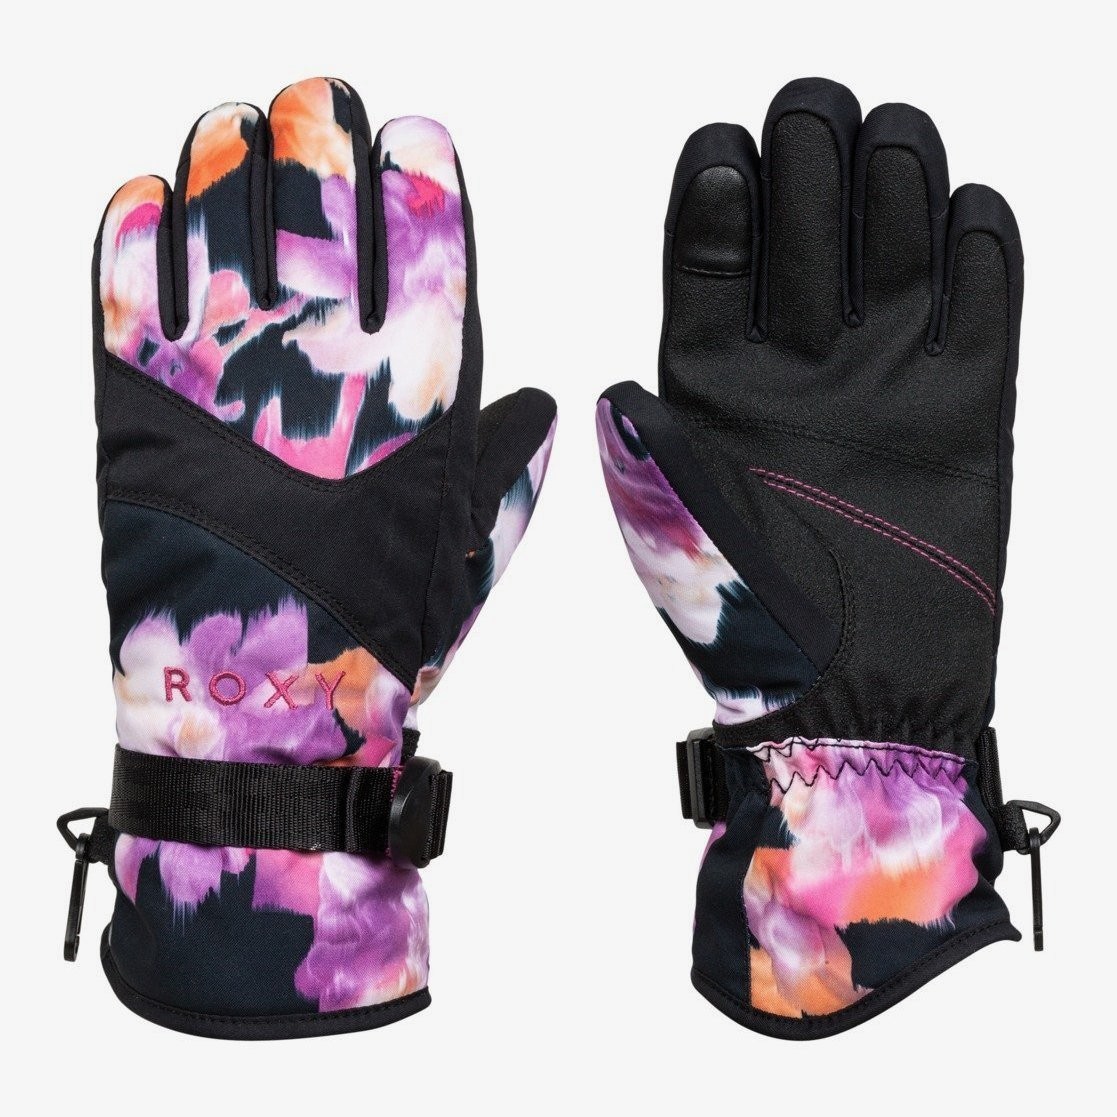 Roxy Jetty | True Gloves | Girl snowboard Desssliza3 Guantes